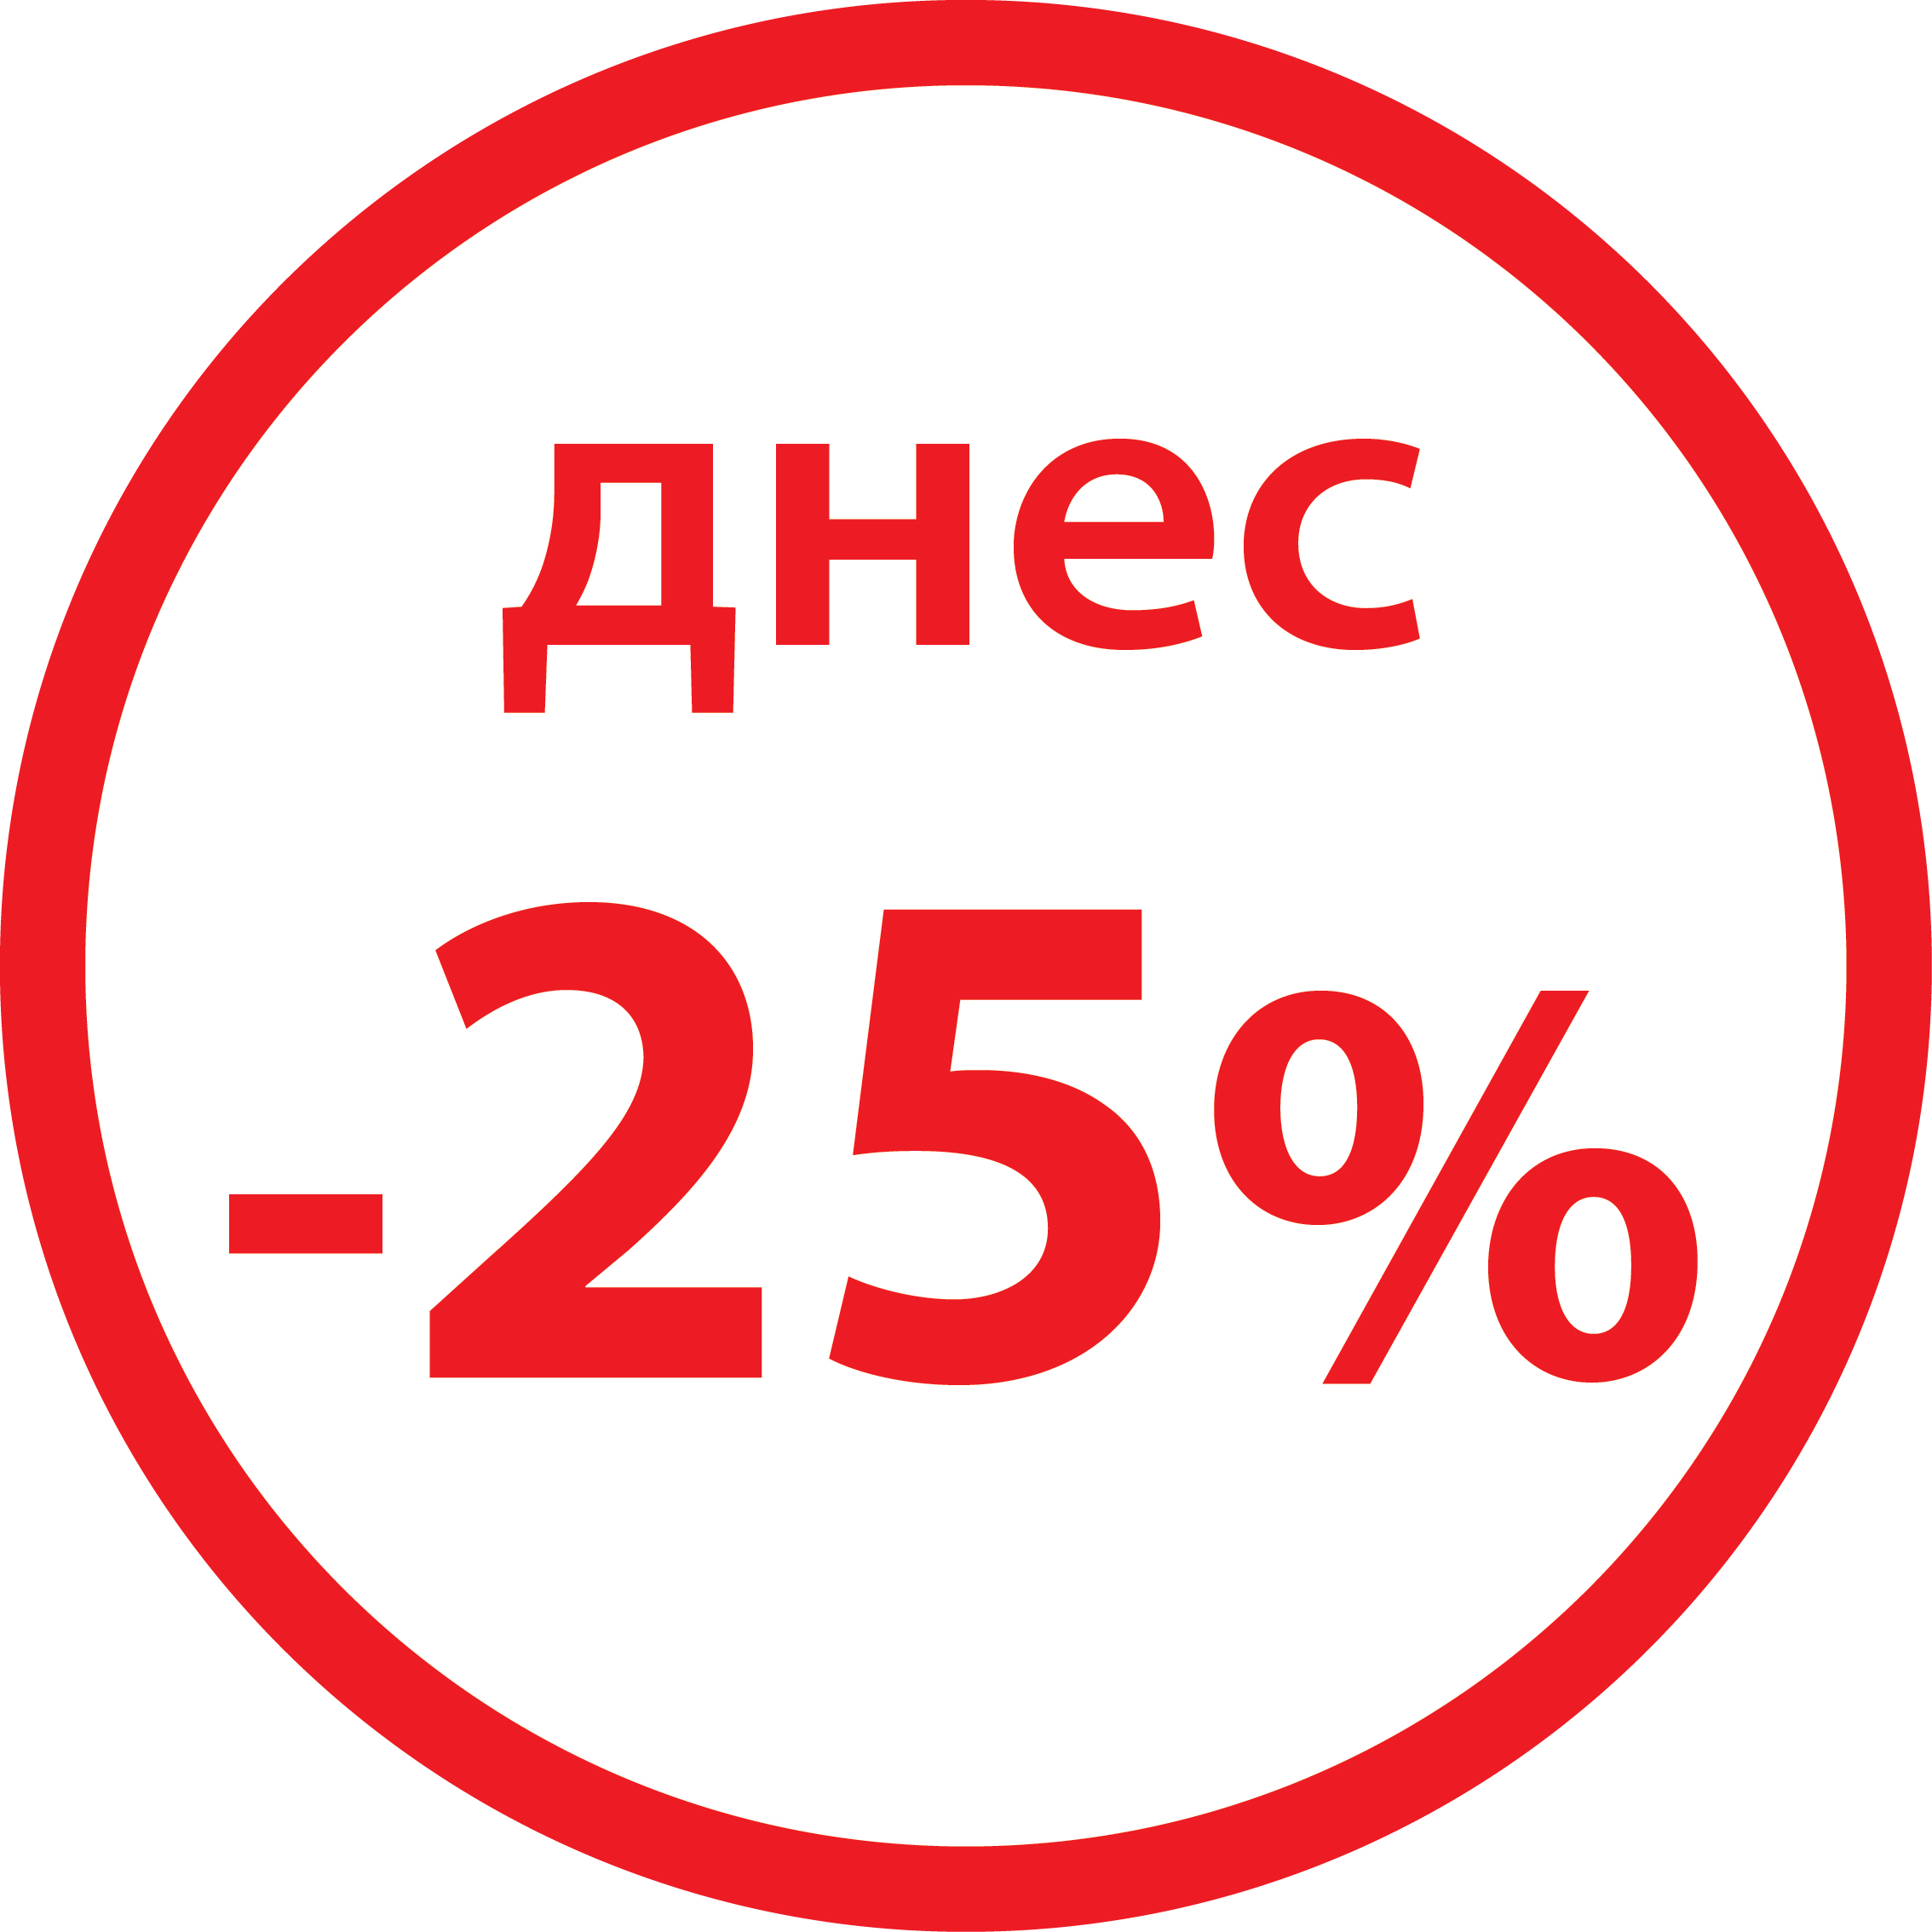 25% off